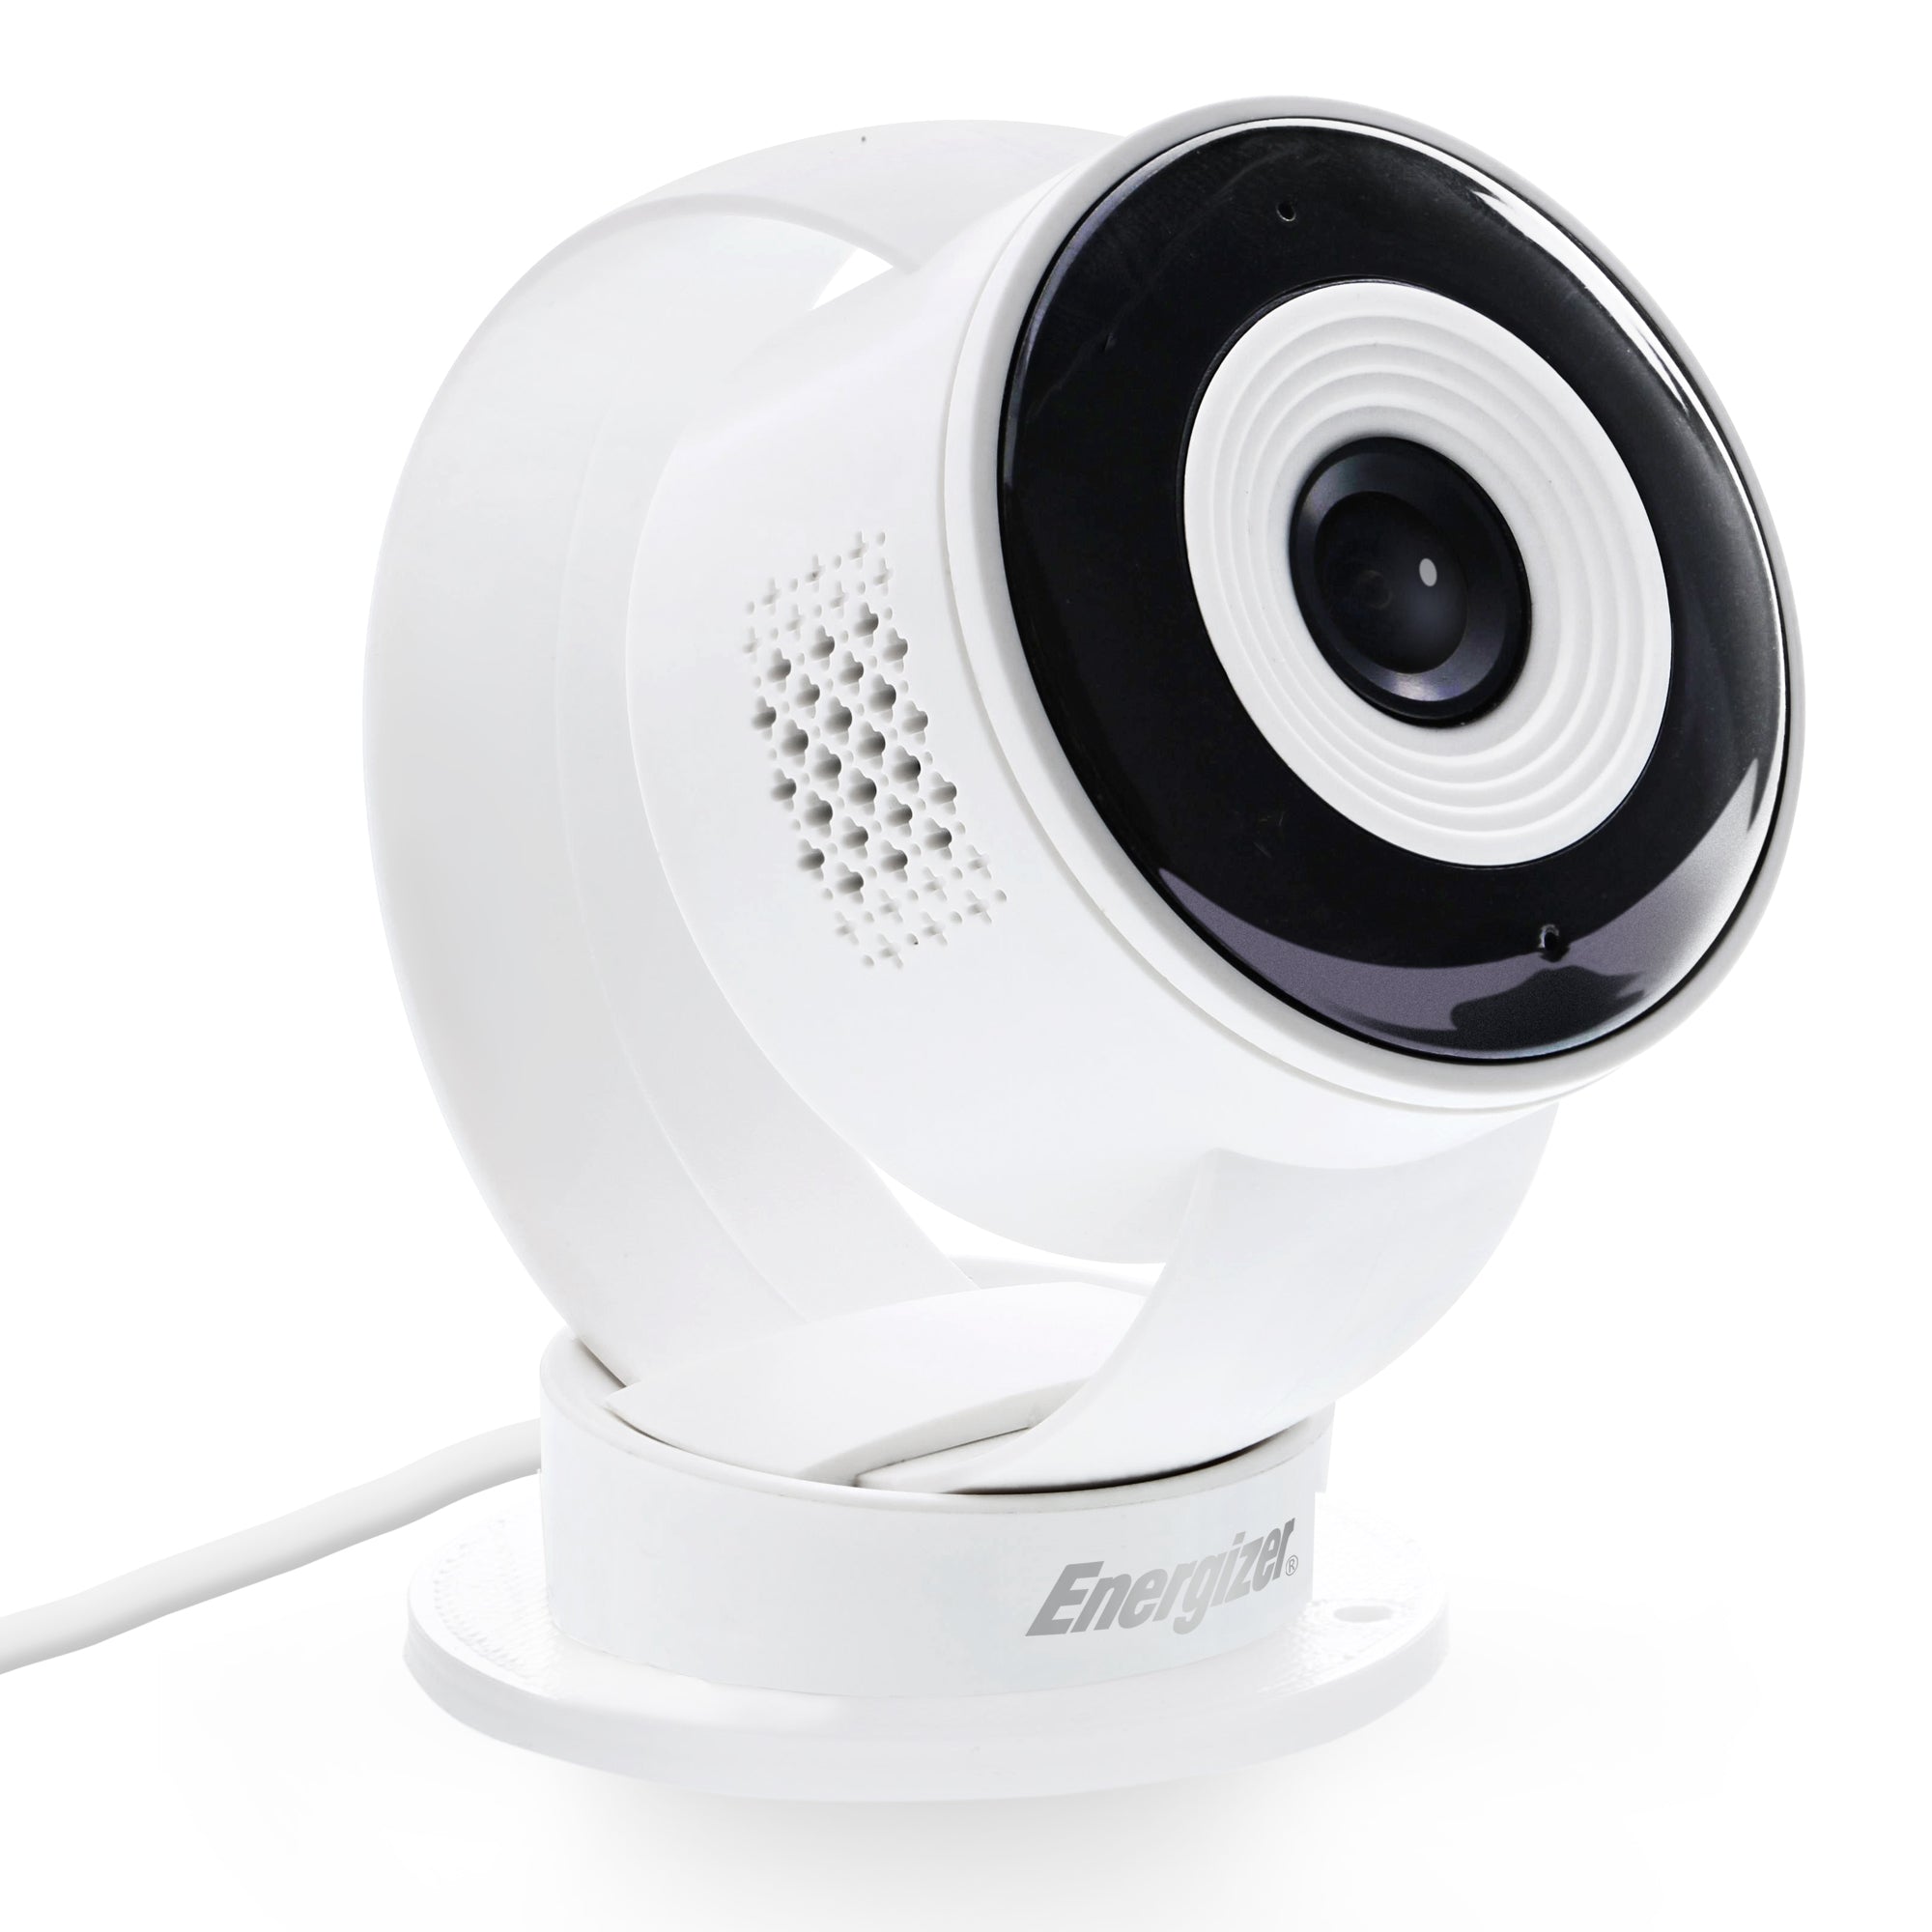 Energizer Smart Wi-Fi 1080P Indoor Camera - White